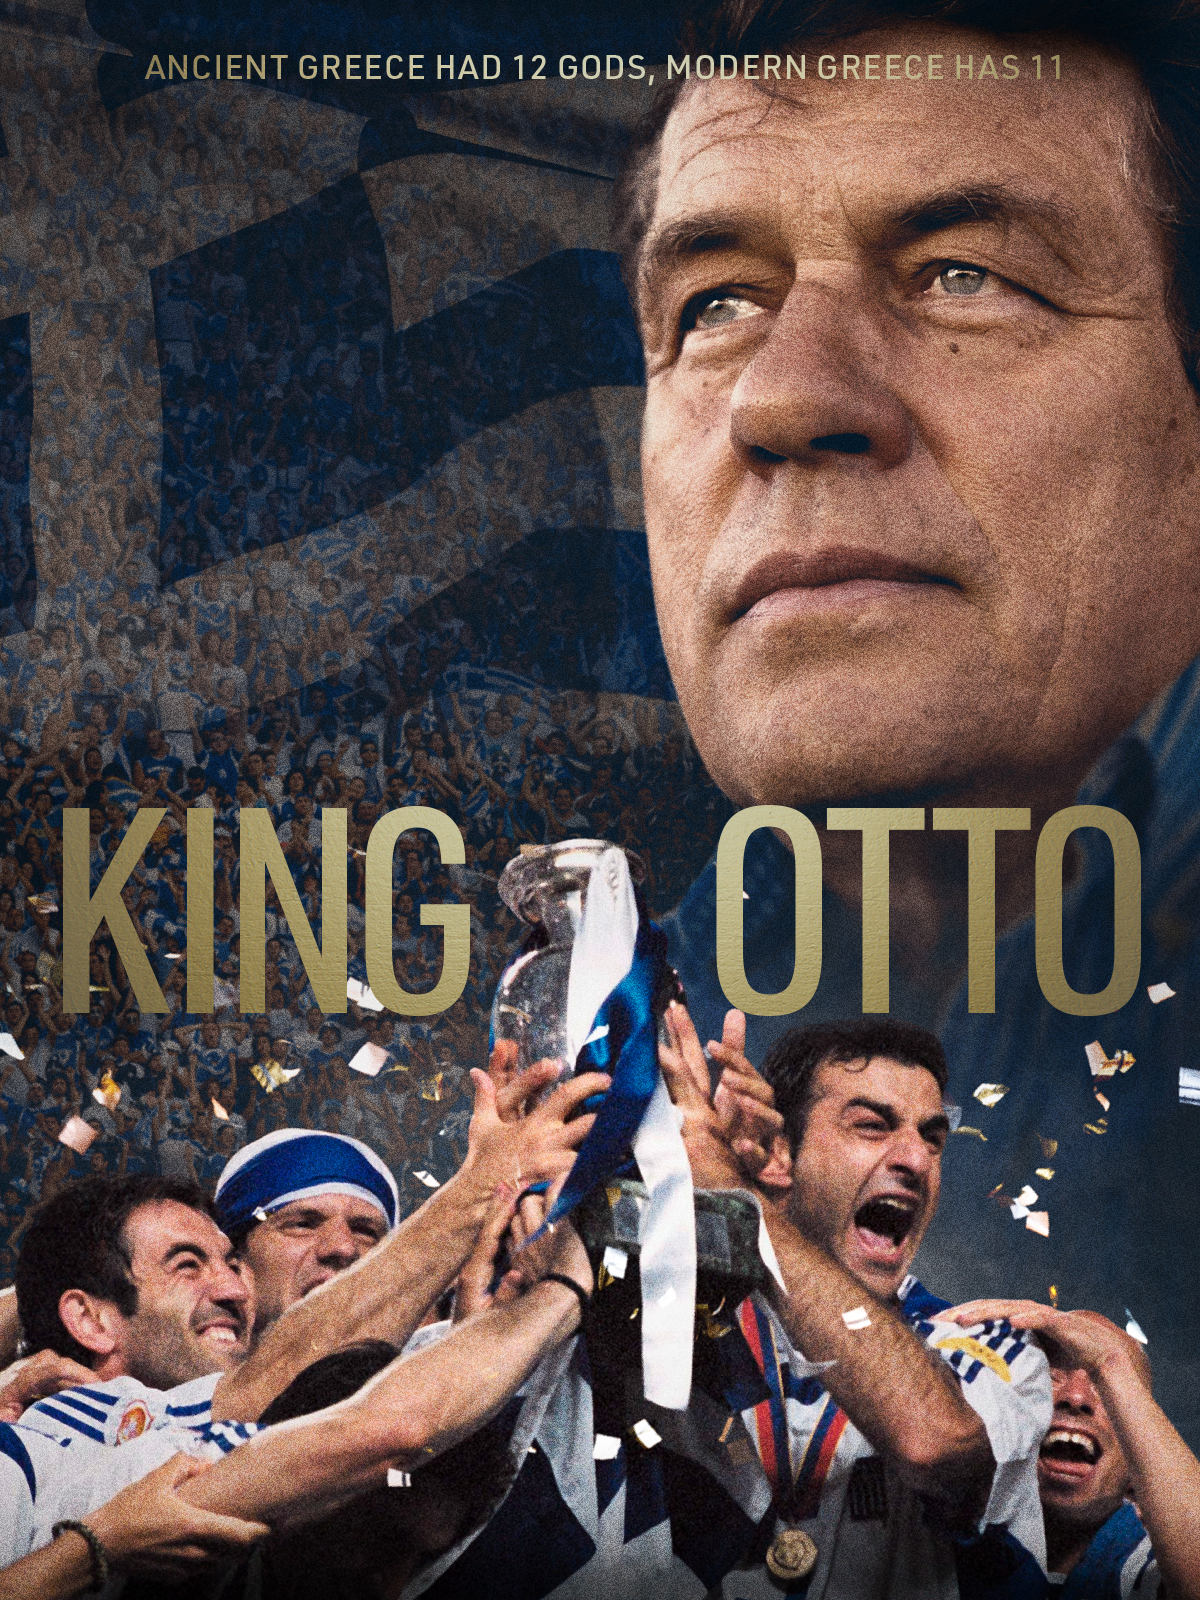 King Otto_3x4_cover_art_1200x1600